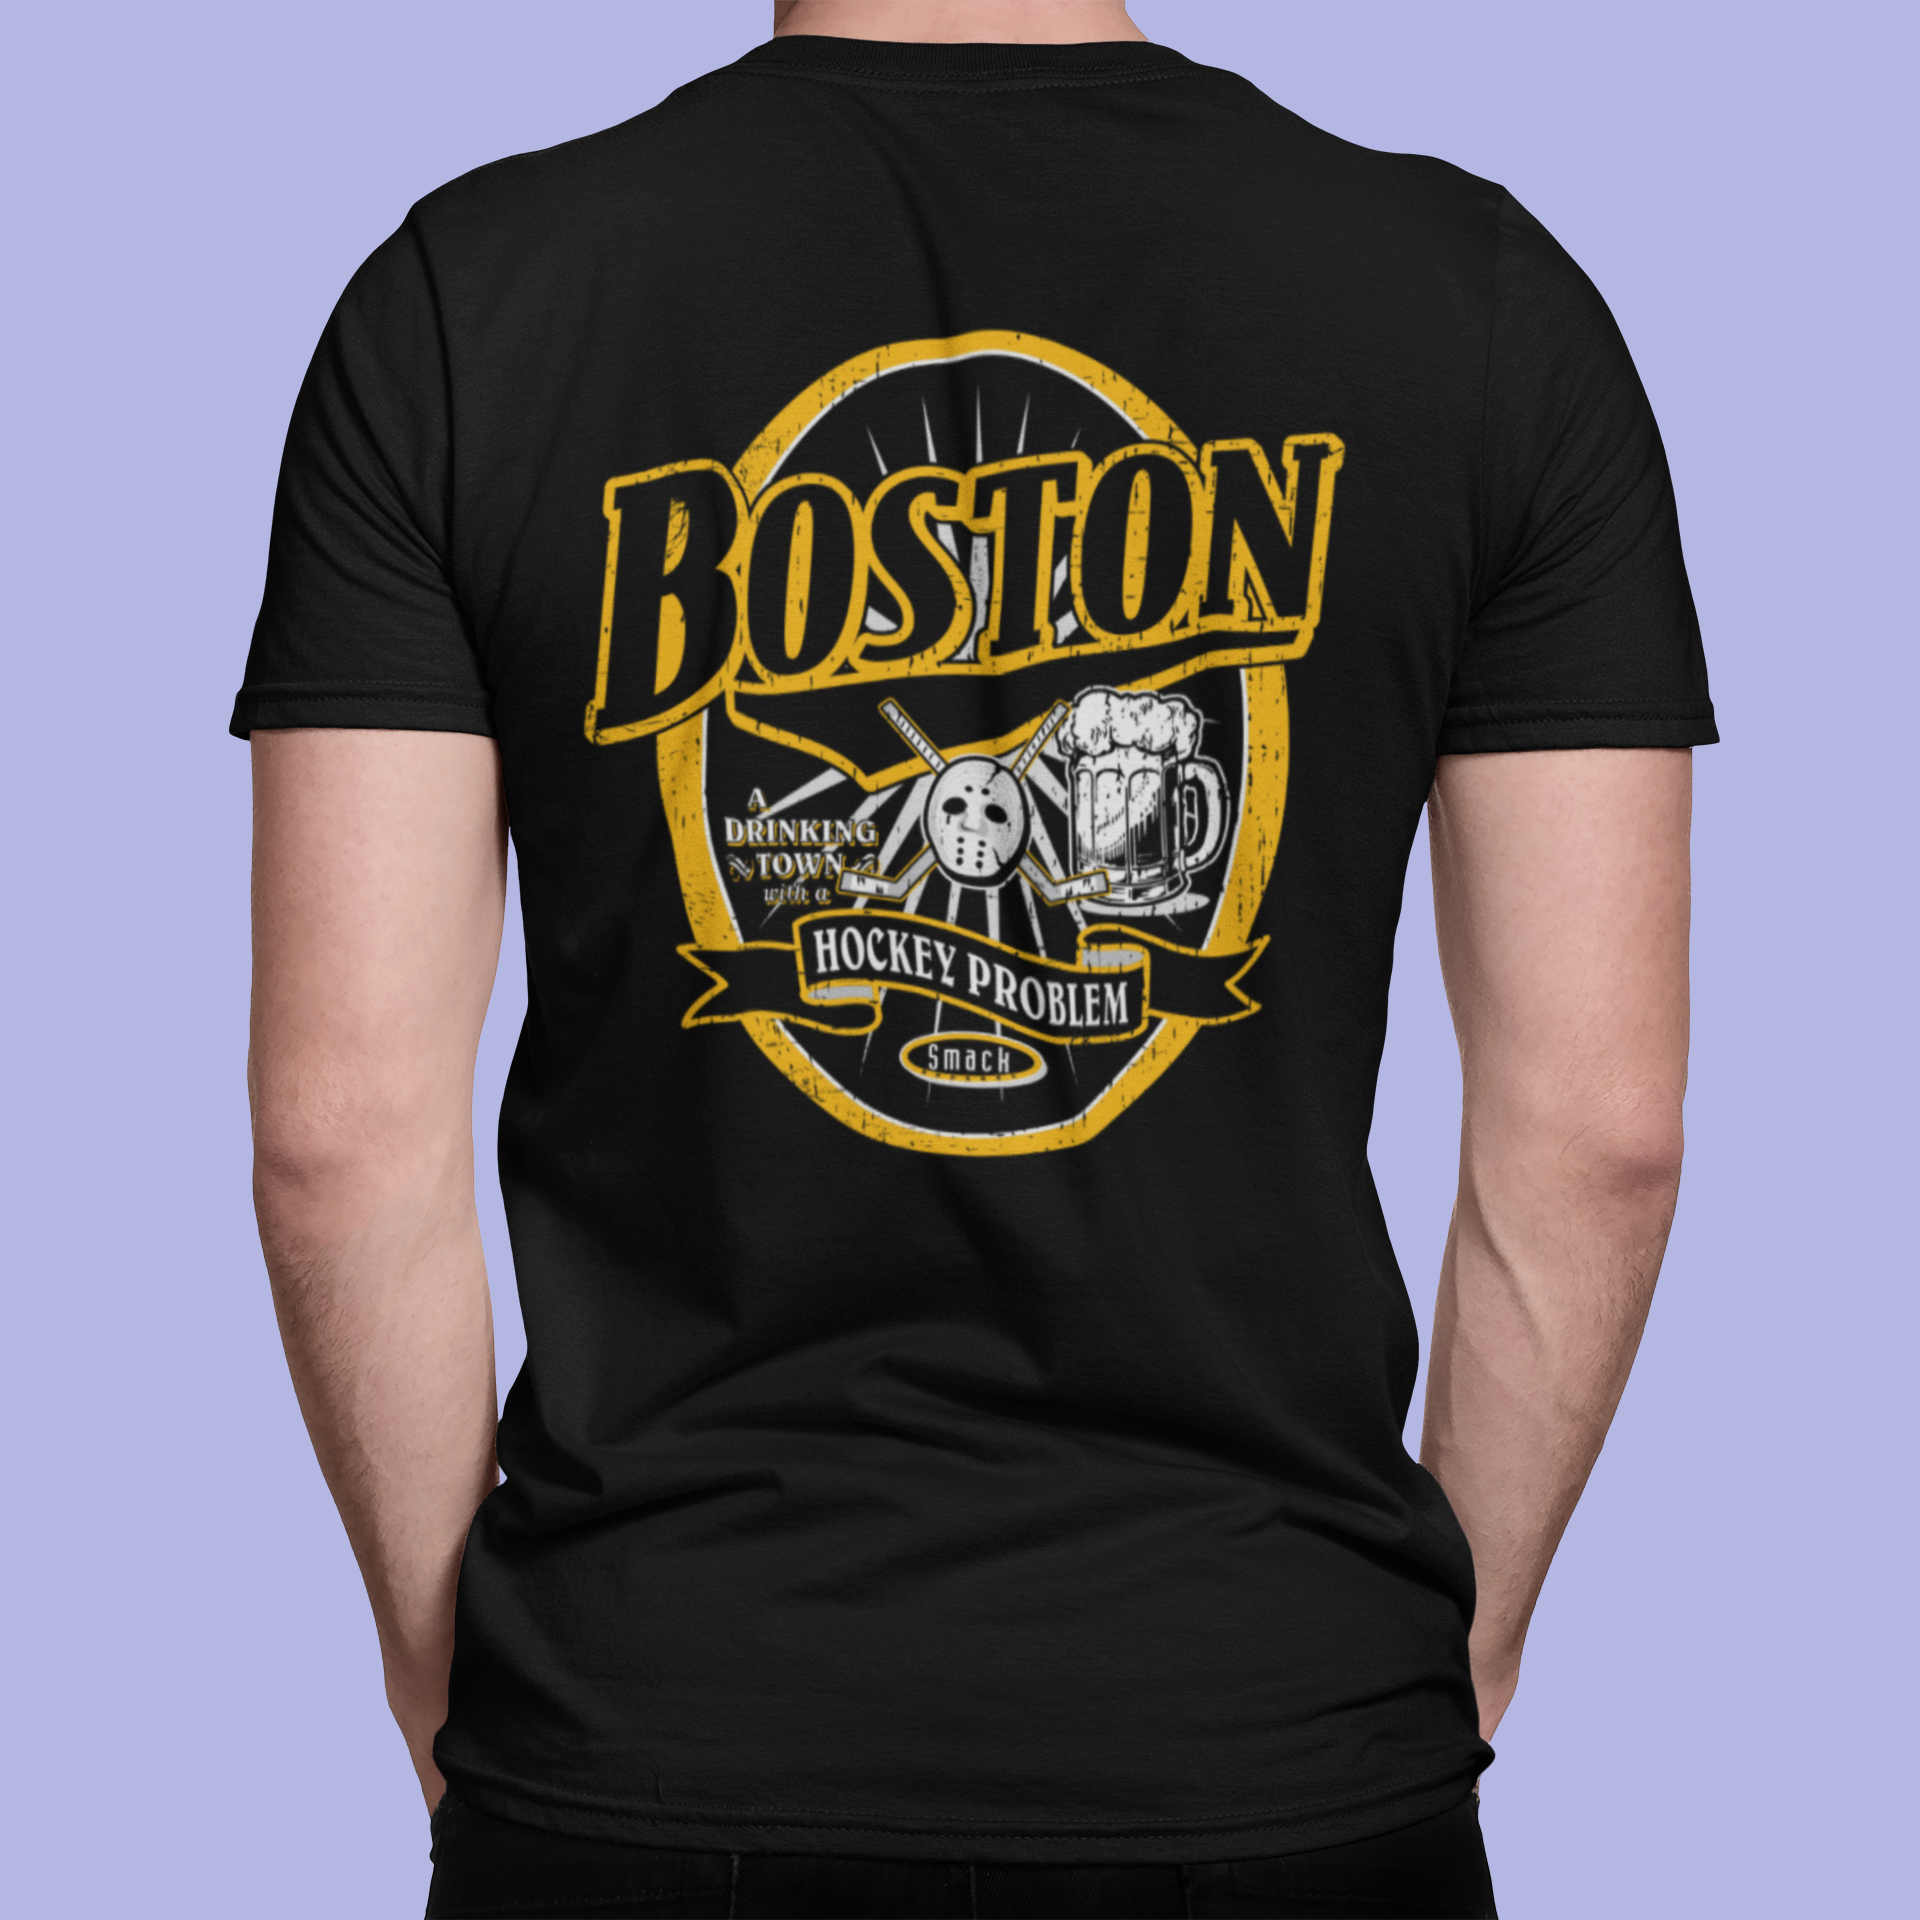 Boston Bruins Gear, Bruins Jerseys, Boston Pro Shop, Boston